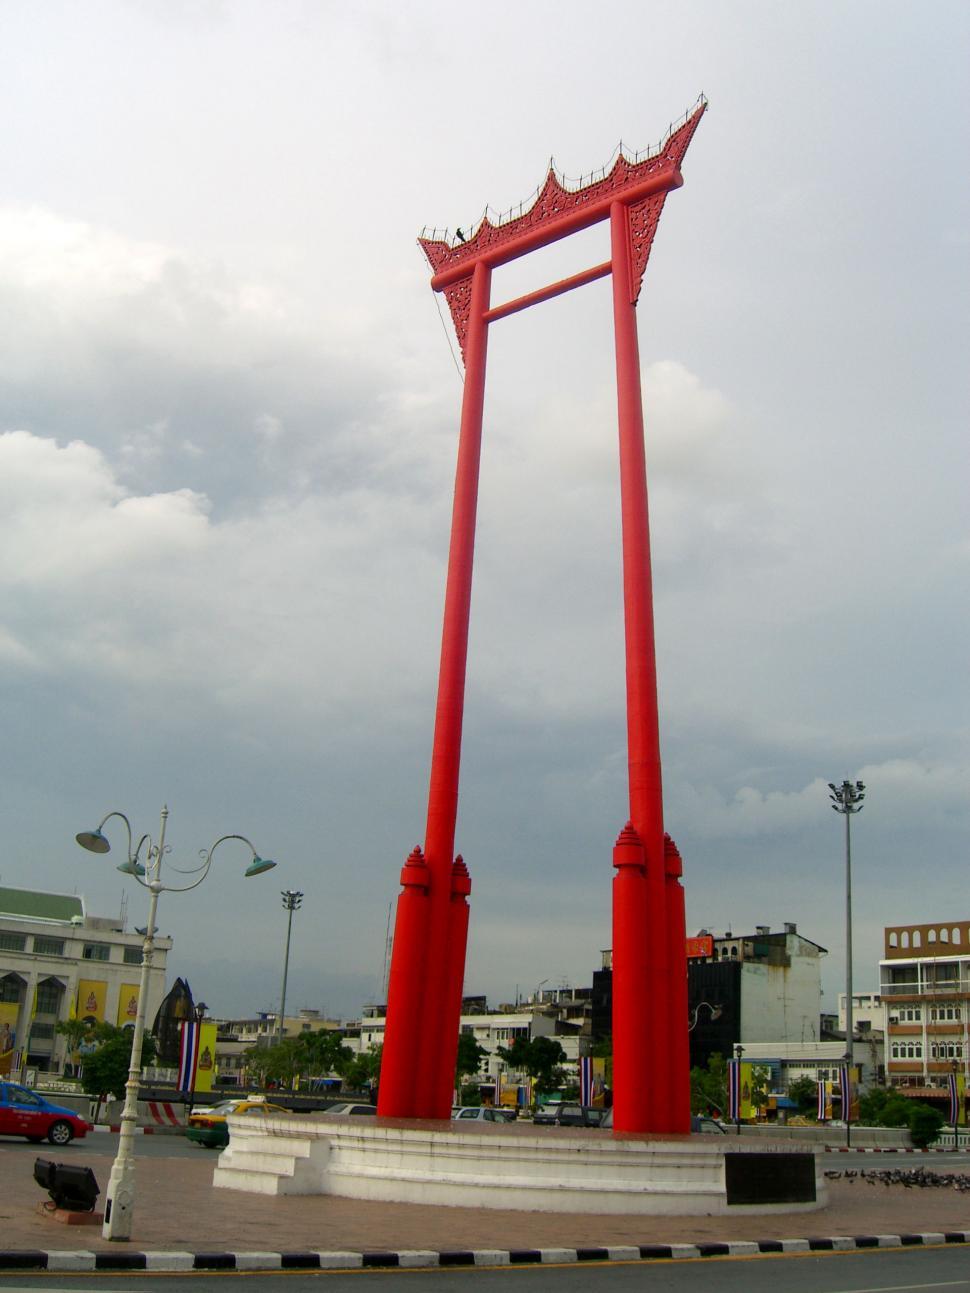 Free Image of Giant Swing 